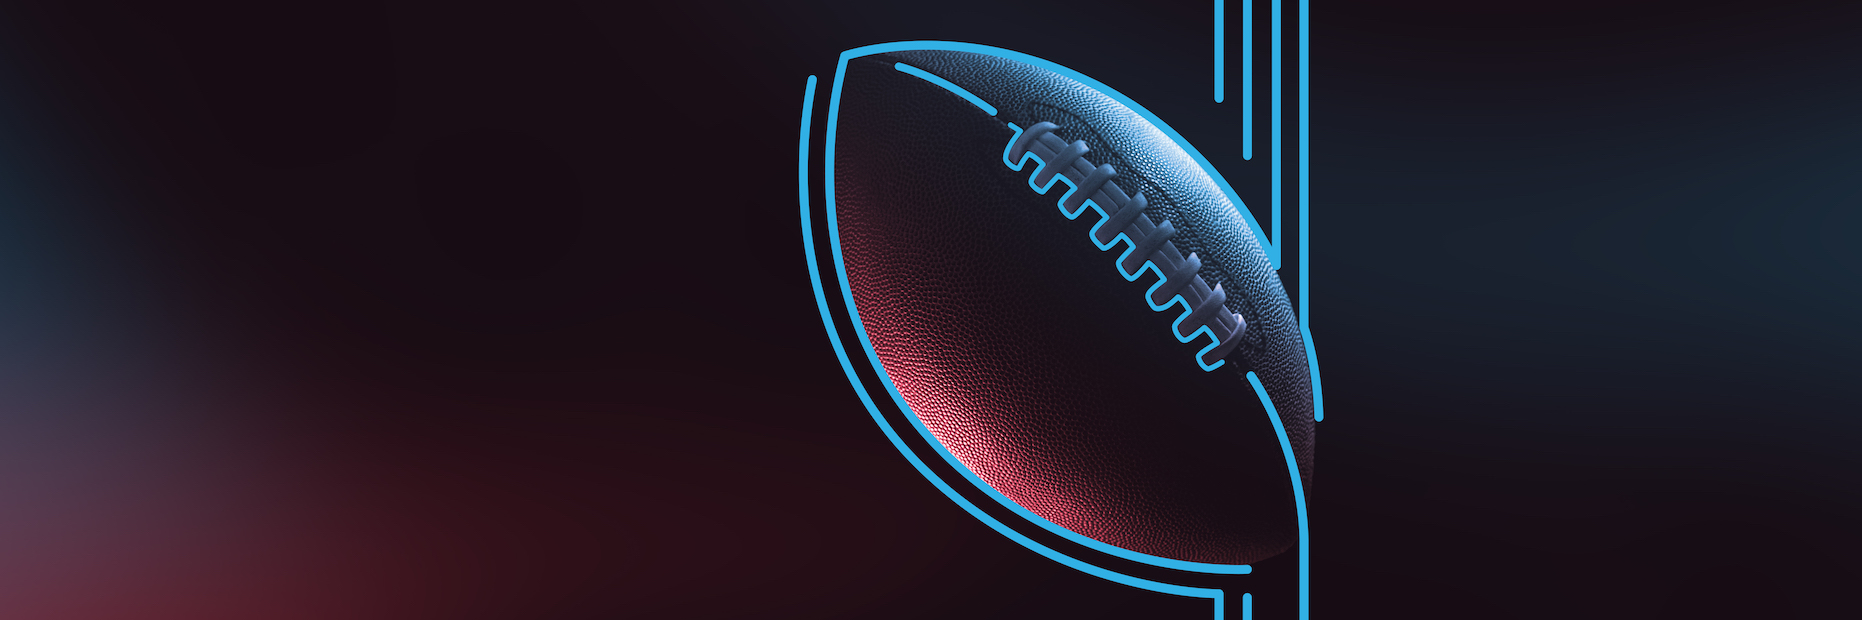 Brand Bowl 2021 Ad Tracker: Cheetos